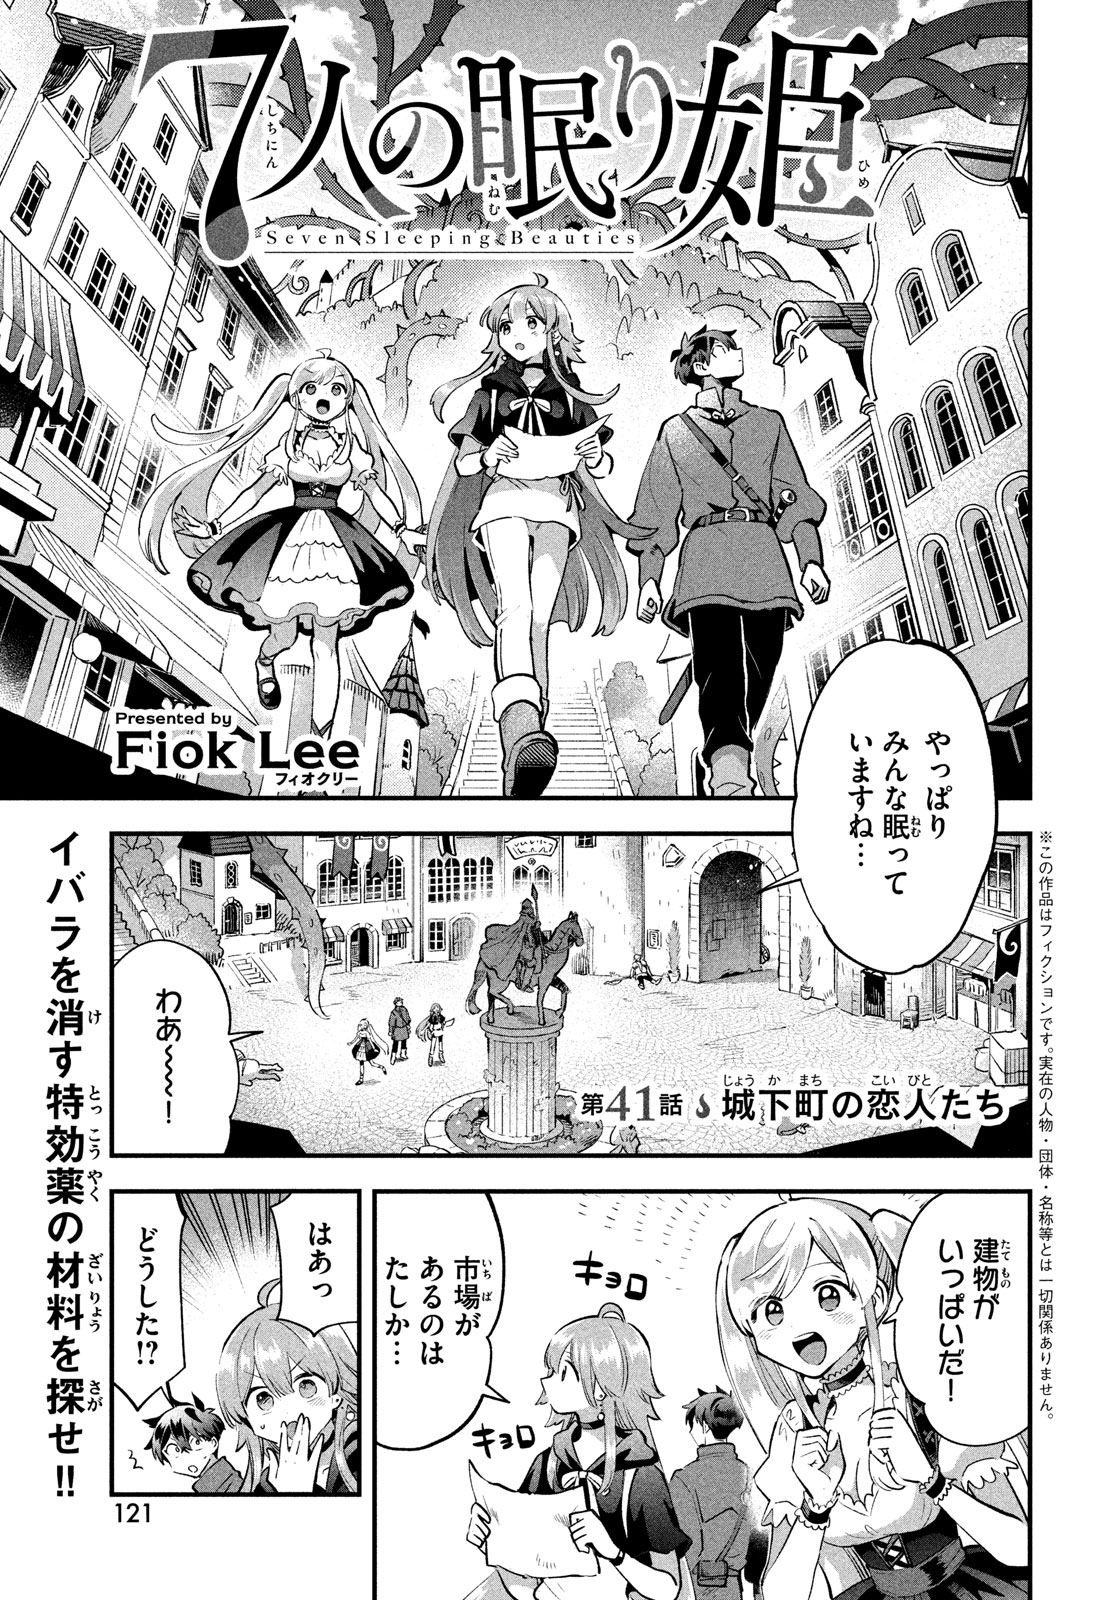 7-nin no Nemuri Hime - Chapter 41 - Page 1